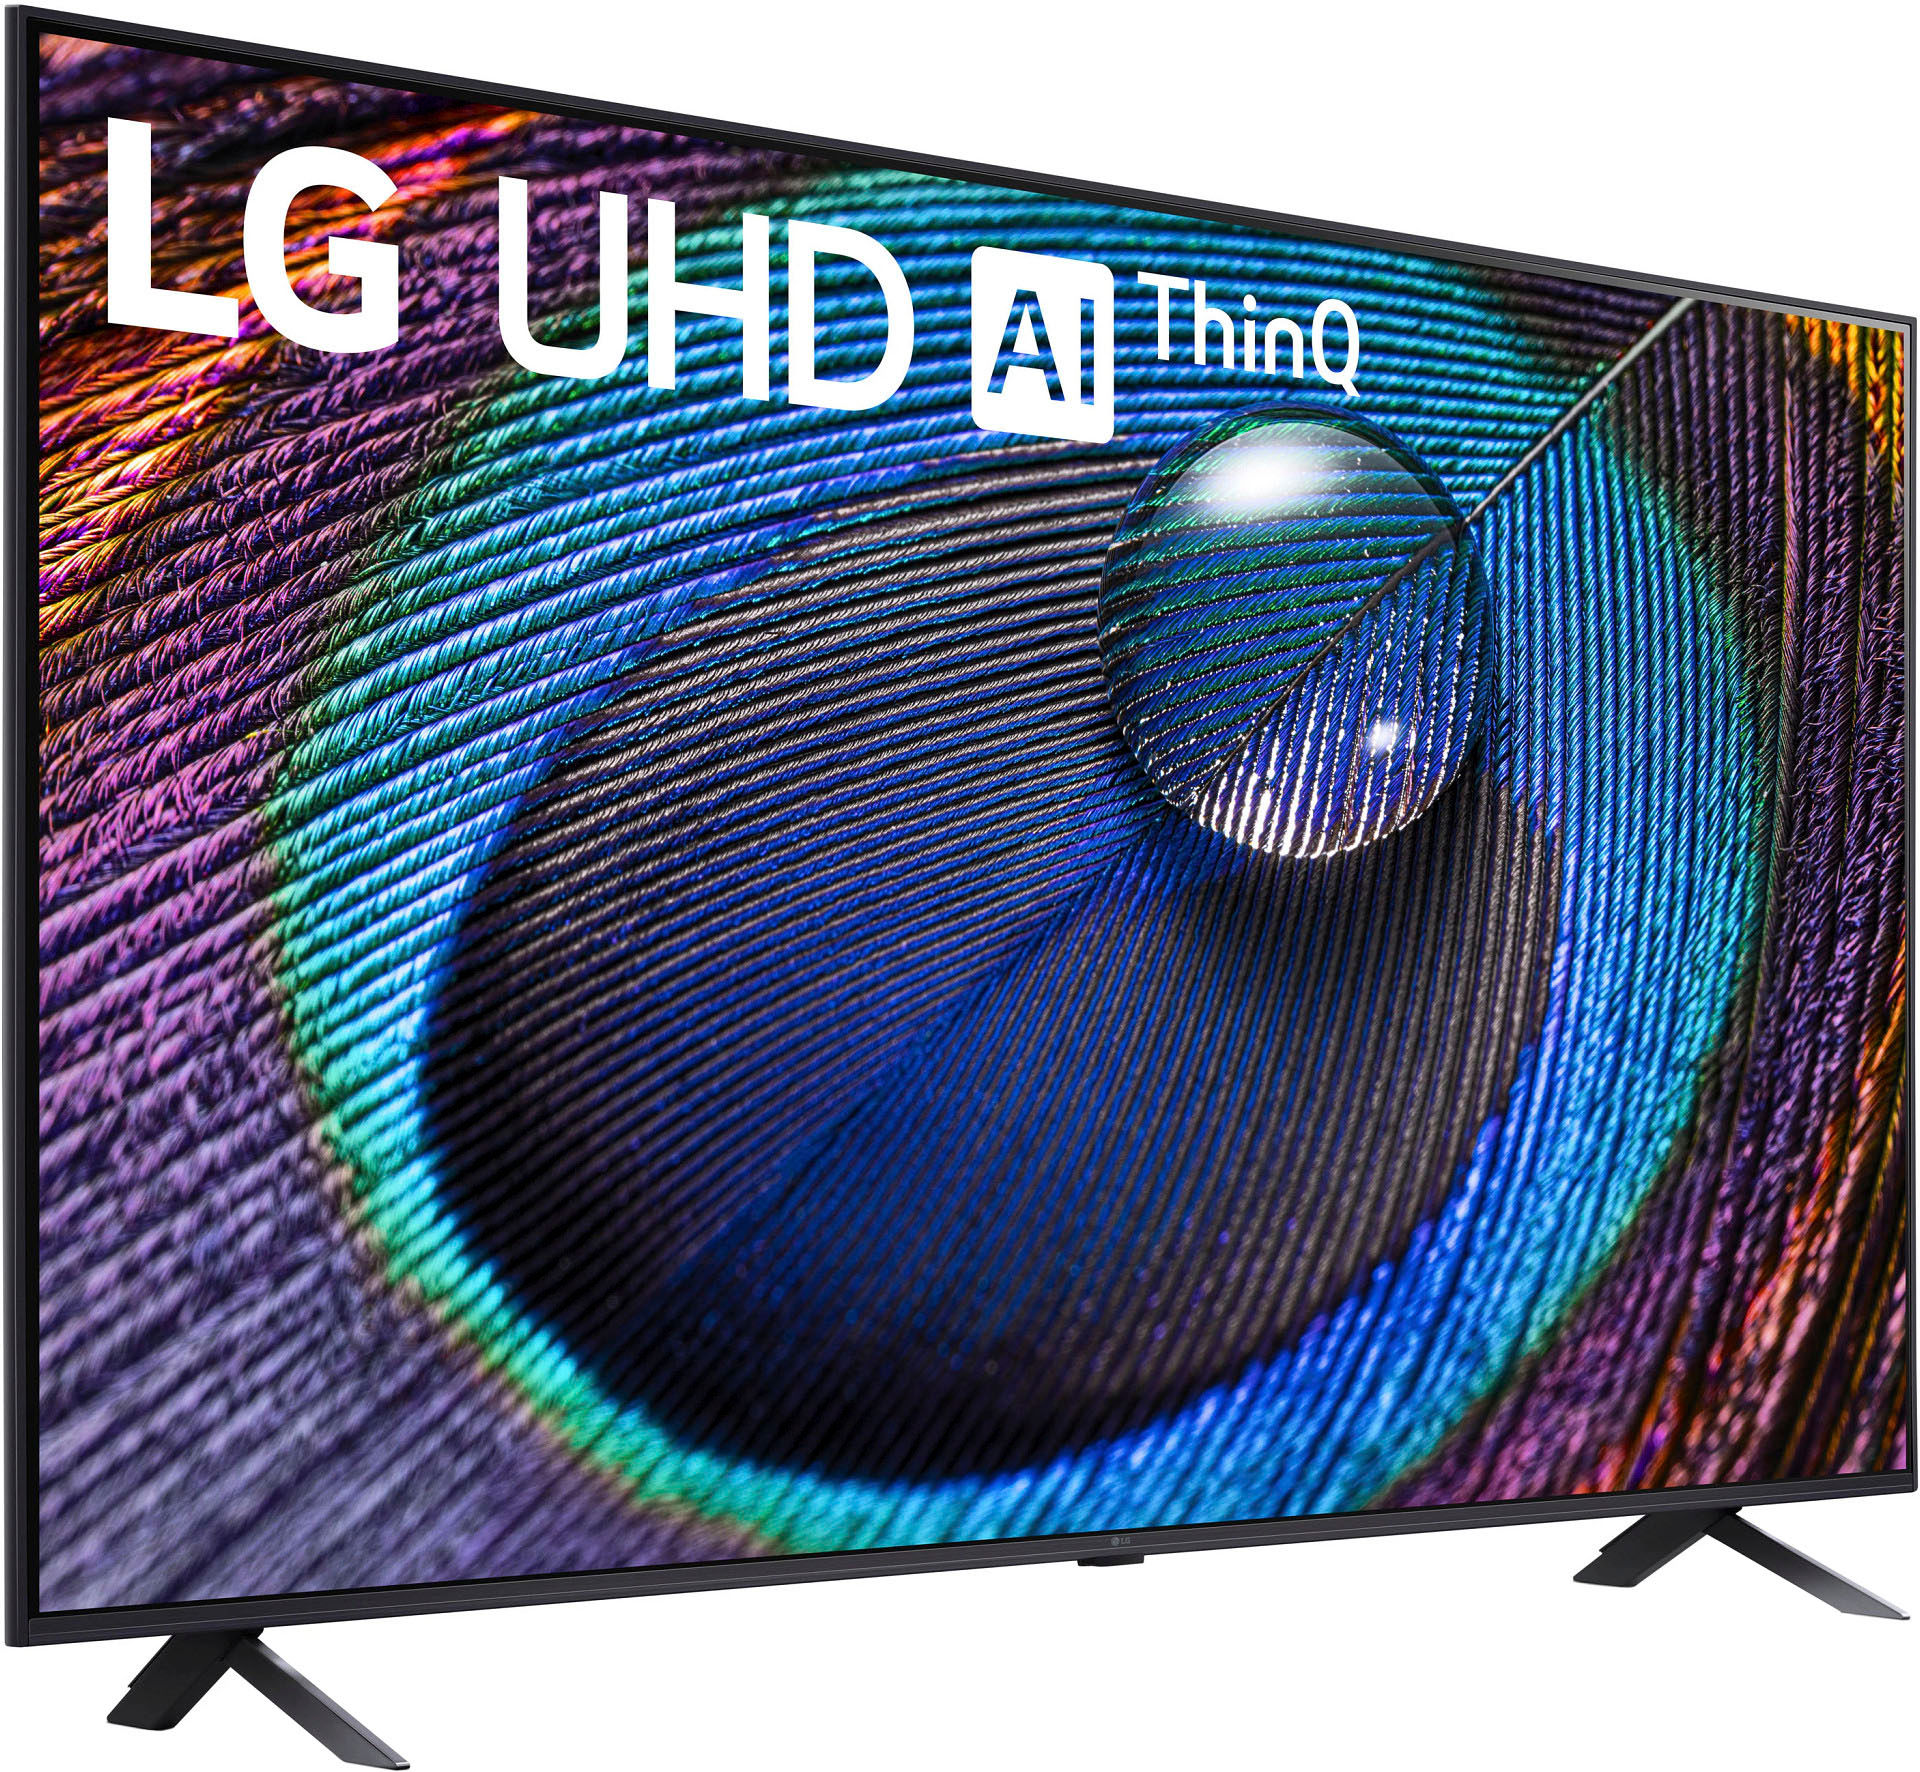 LG 65” Class UR9000 Series LED 4K UHD webOS TV 65UR9000PUA Best Buy